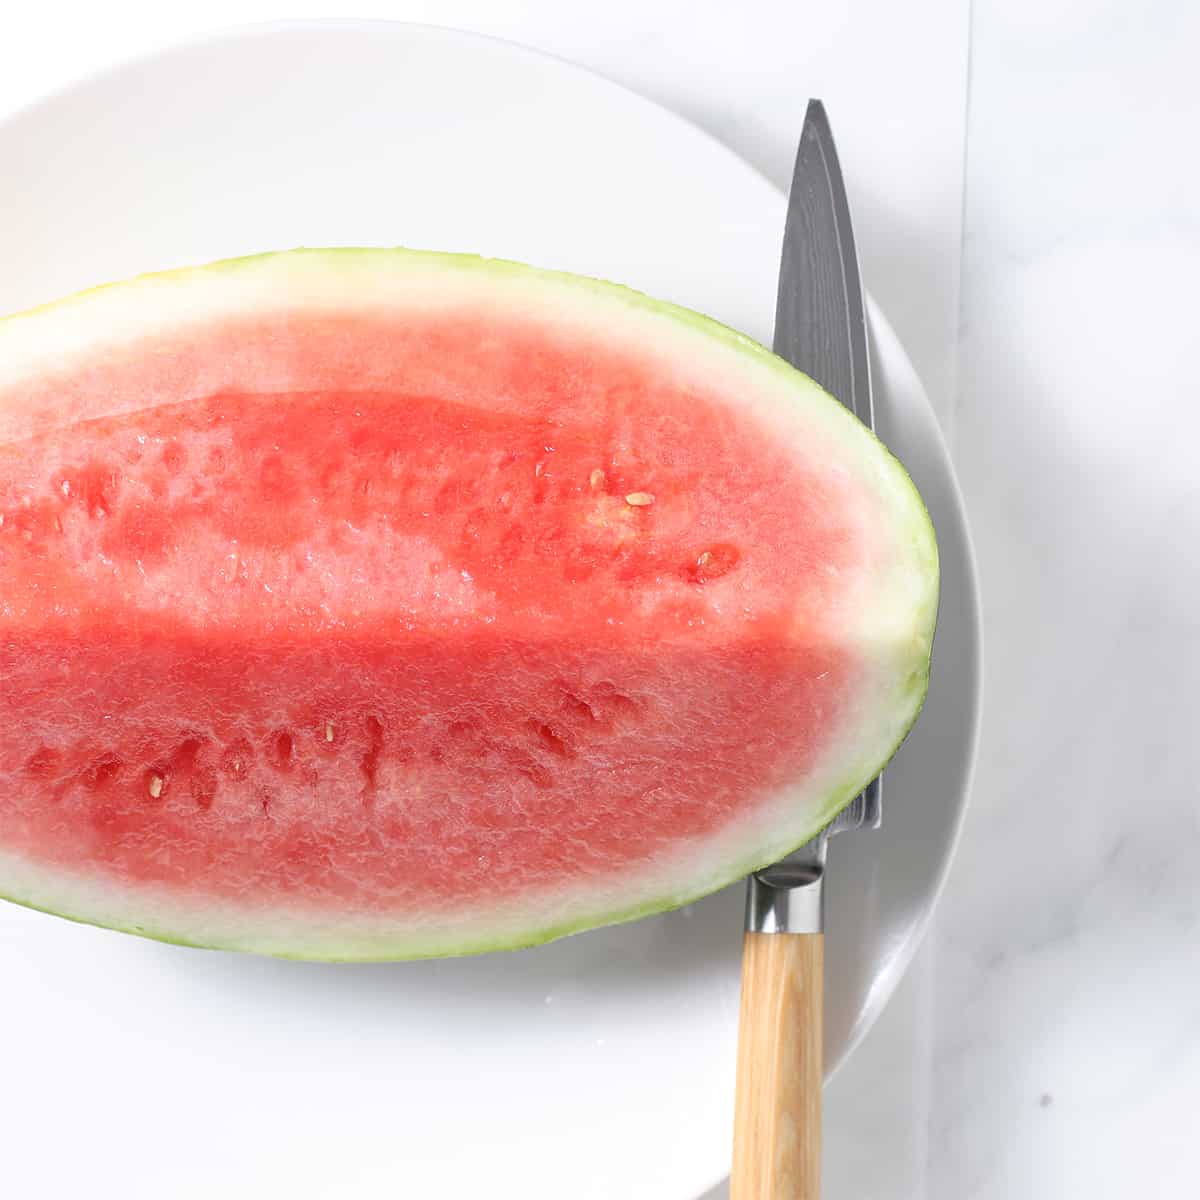 watermelon wedge.